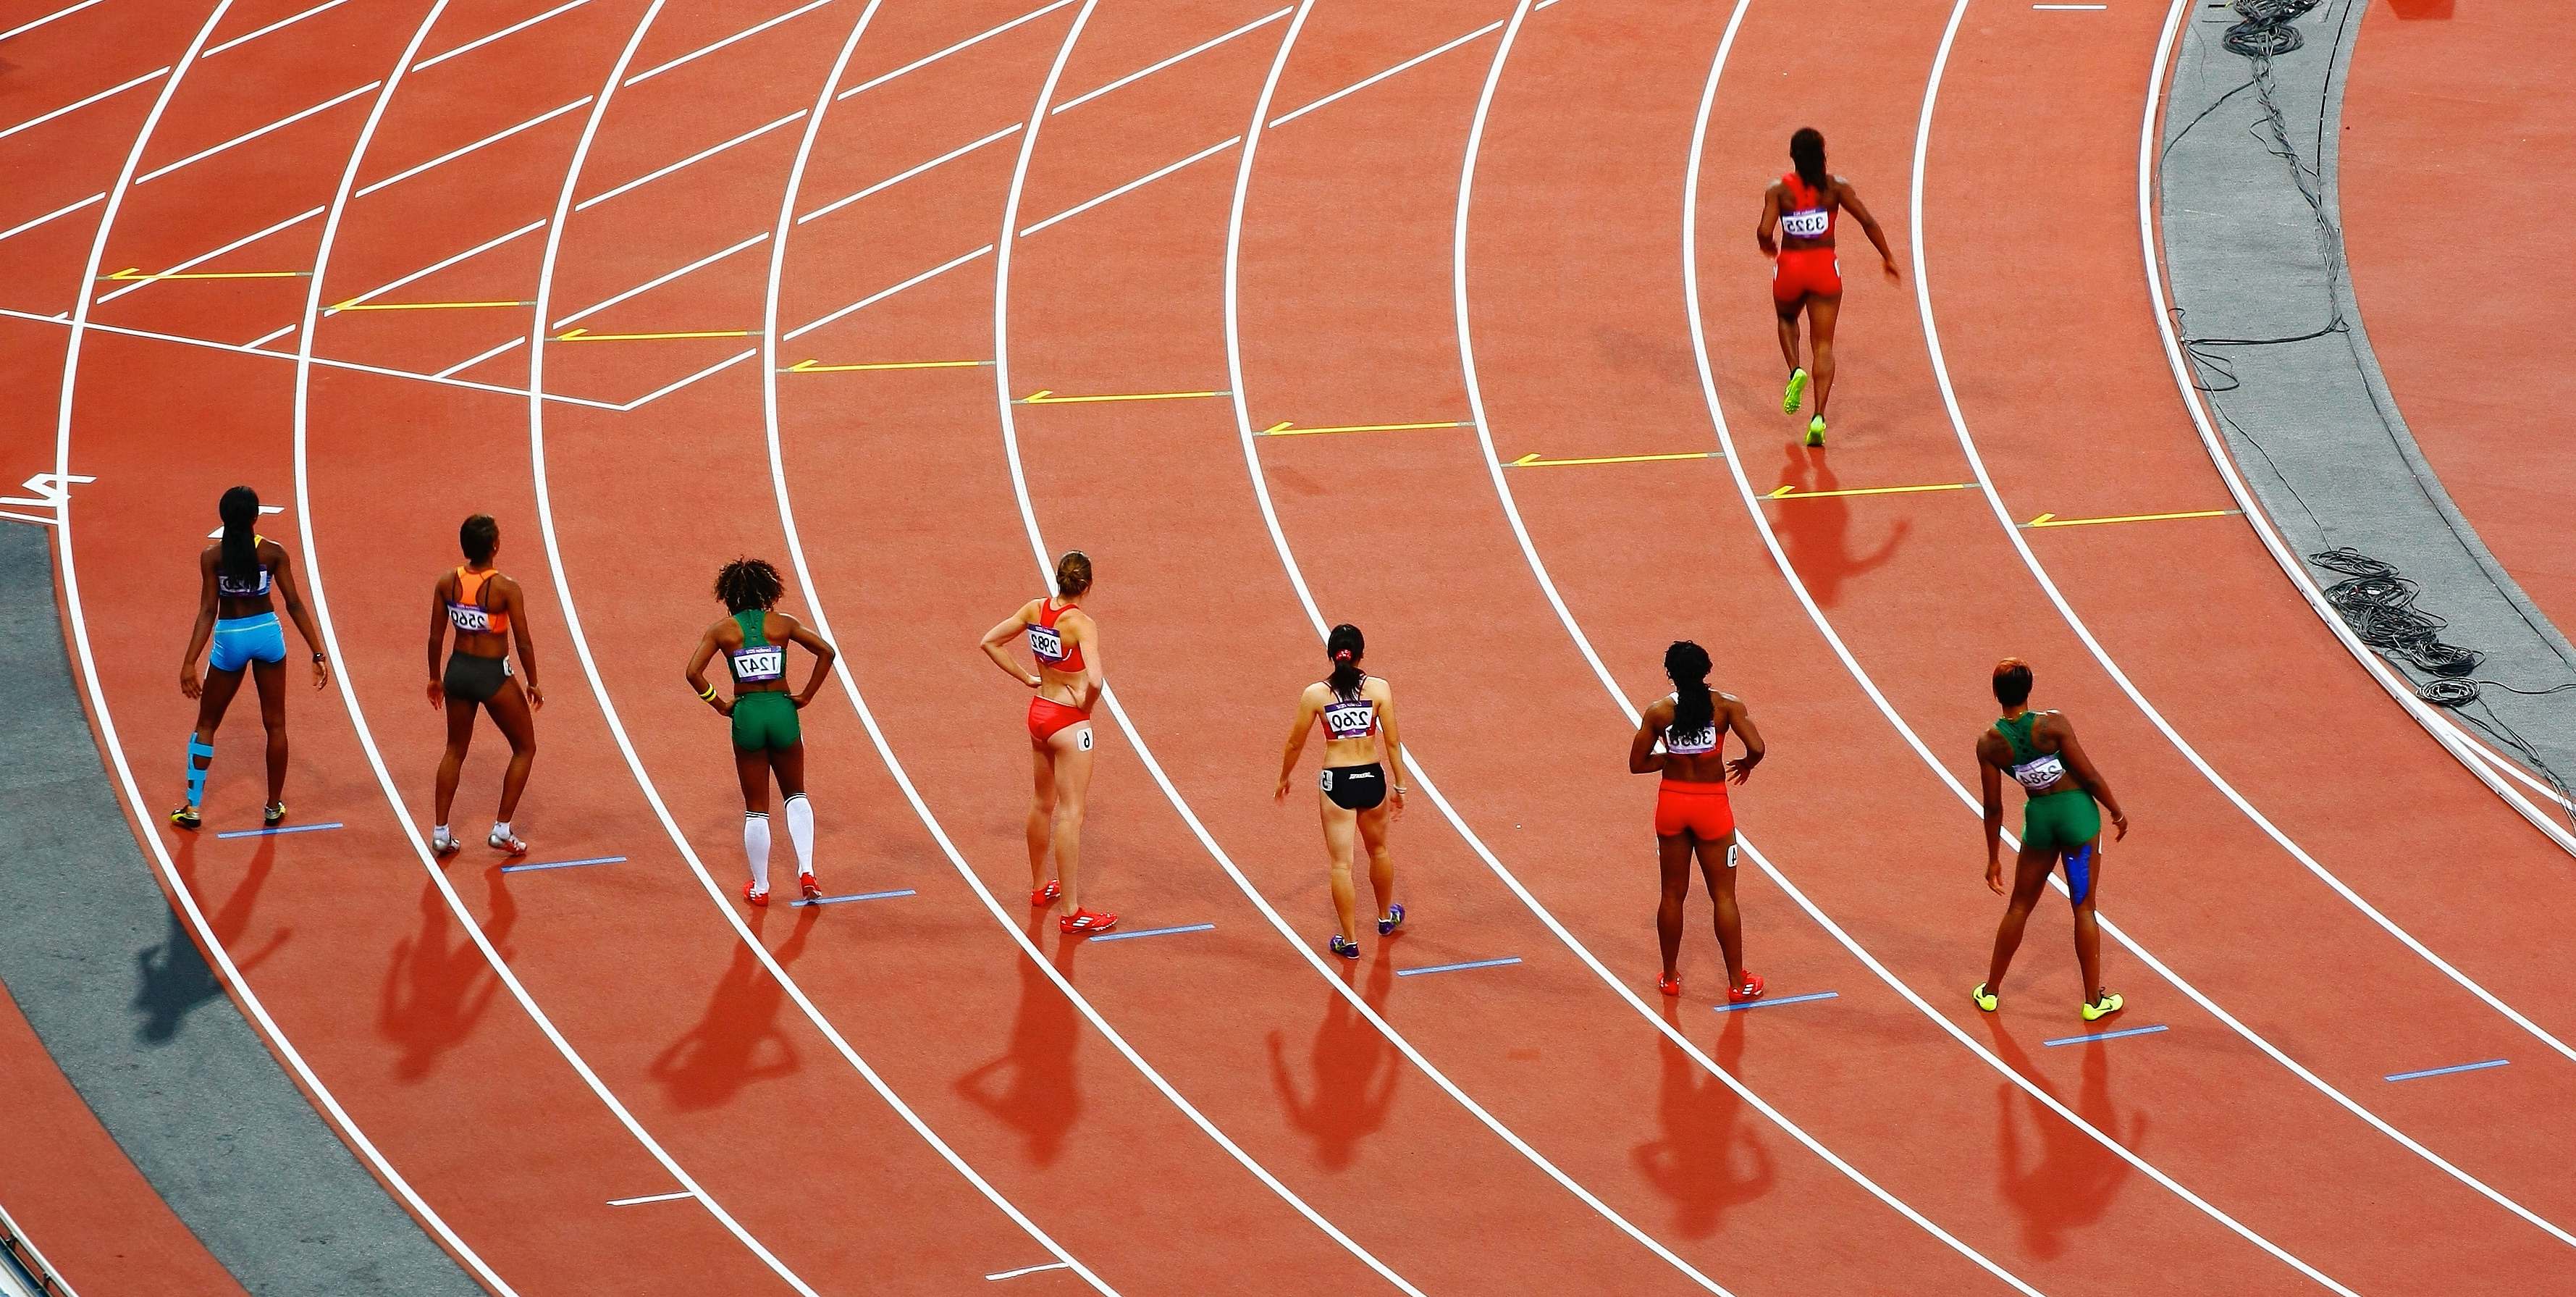 Sport Women Running On Race Track During Daytime Running Image - Free